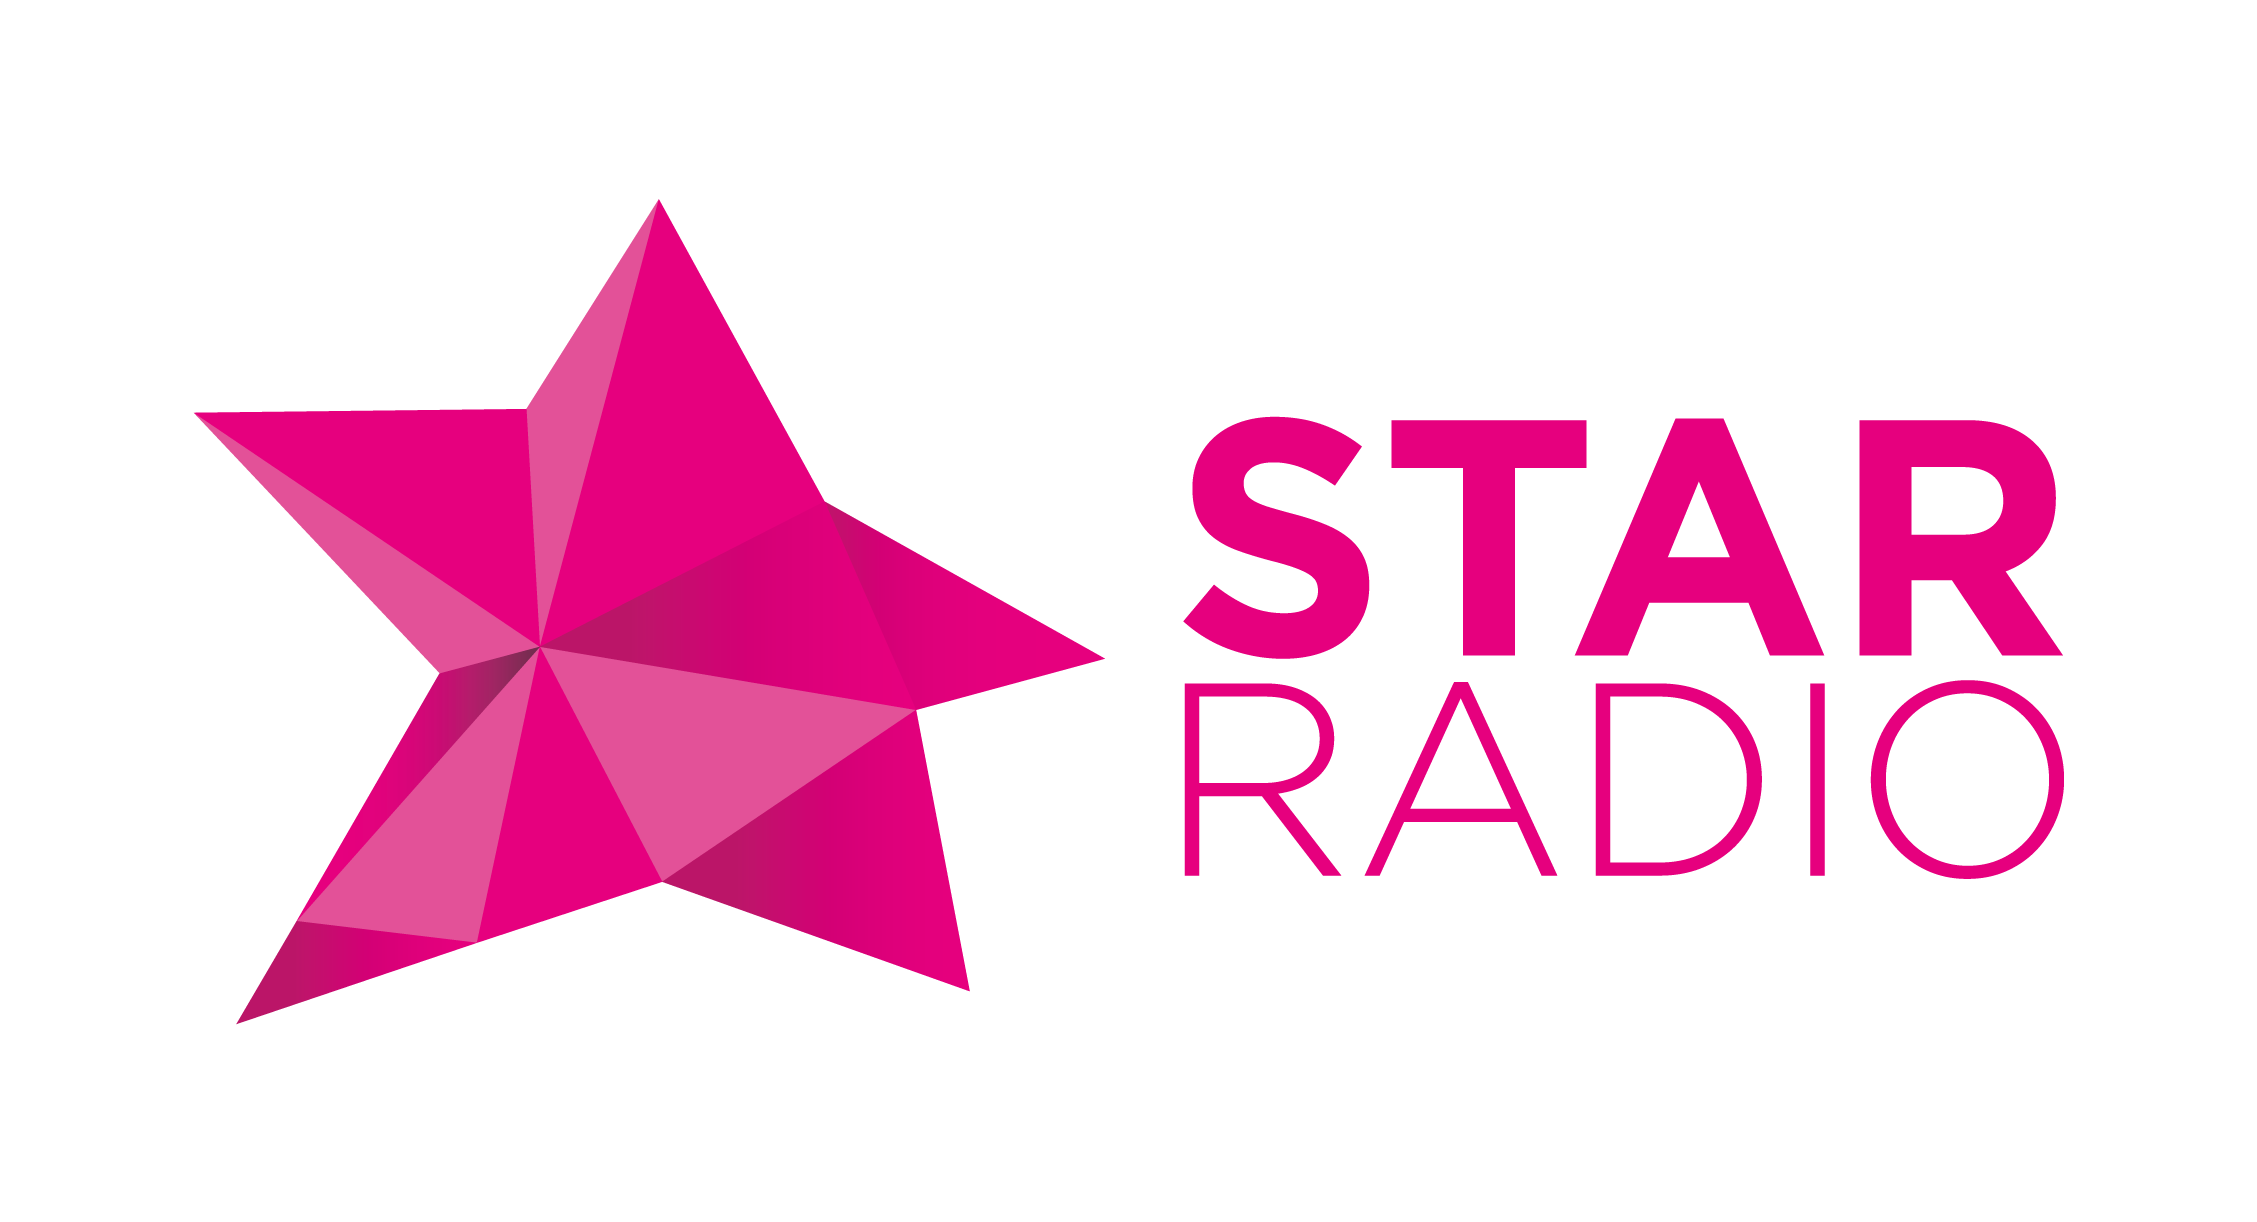 Star Radio Go Digital